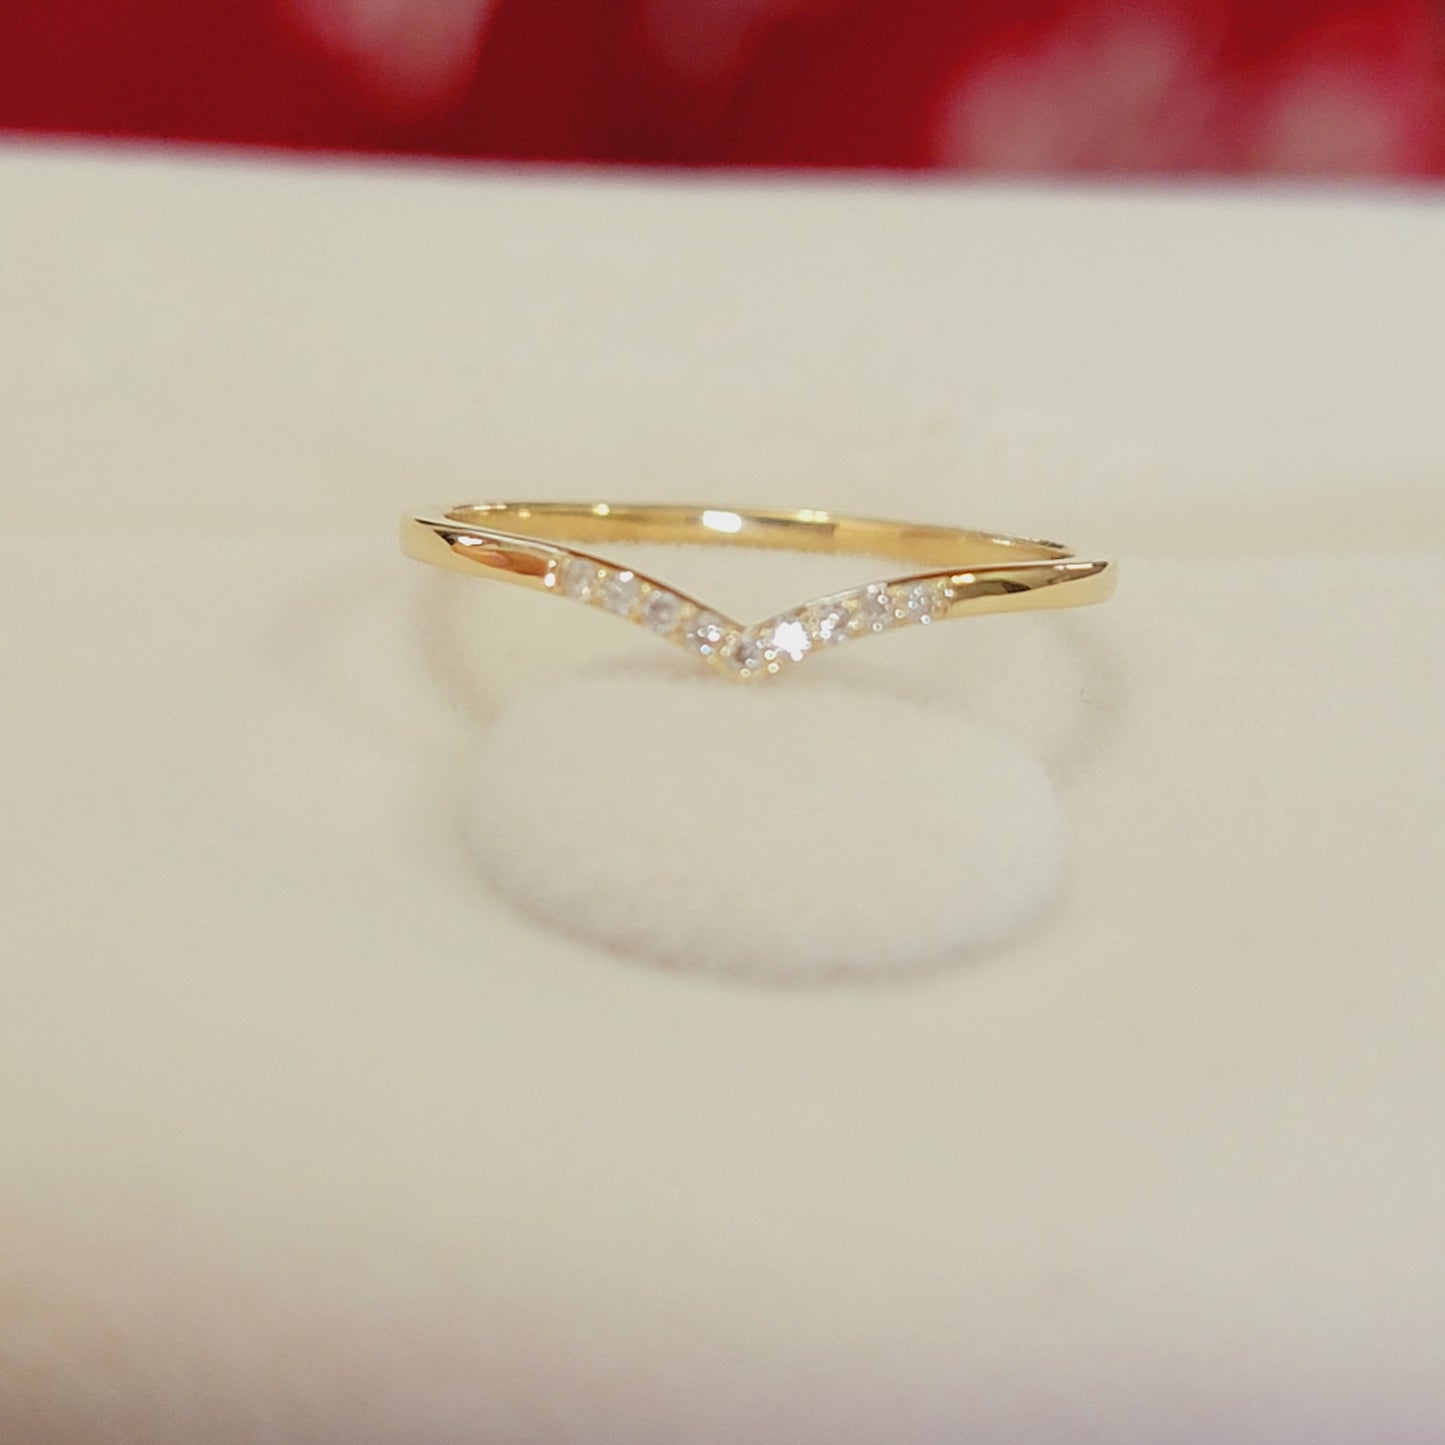 Curved Diamond Ring, Dainty Gold Ring for Women, 14 k Gold Diamond Wedding Band, V Shape Stacking Rose Gold Ring, Matching Band, Bridal Ring